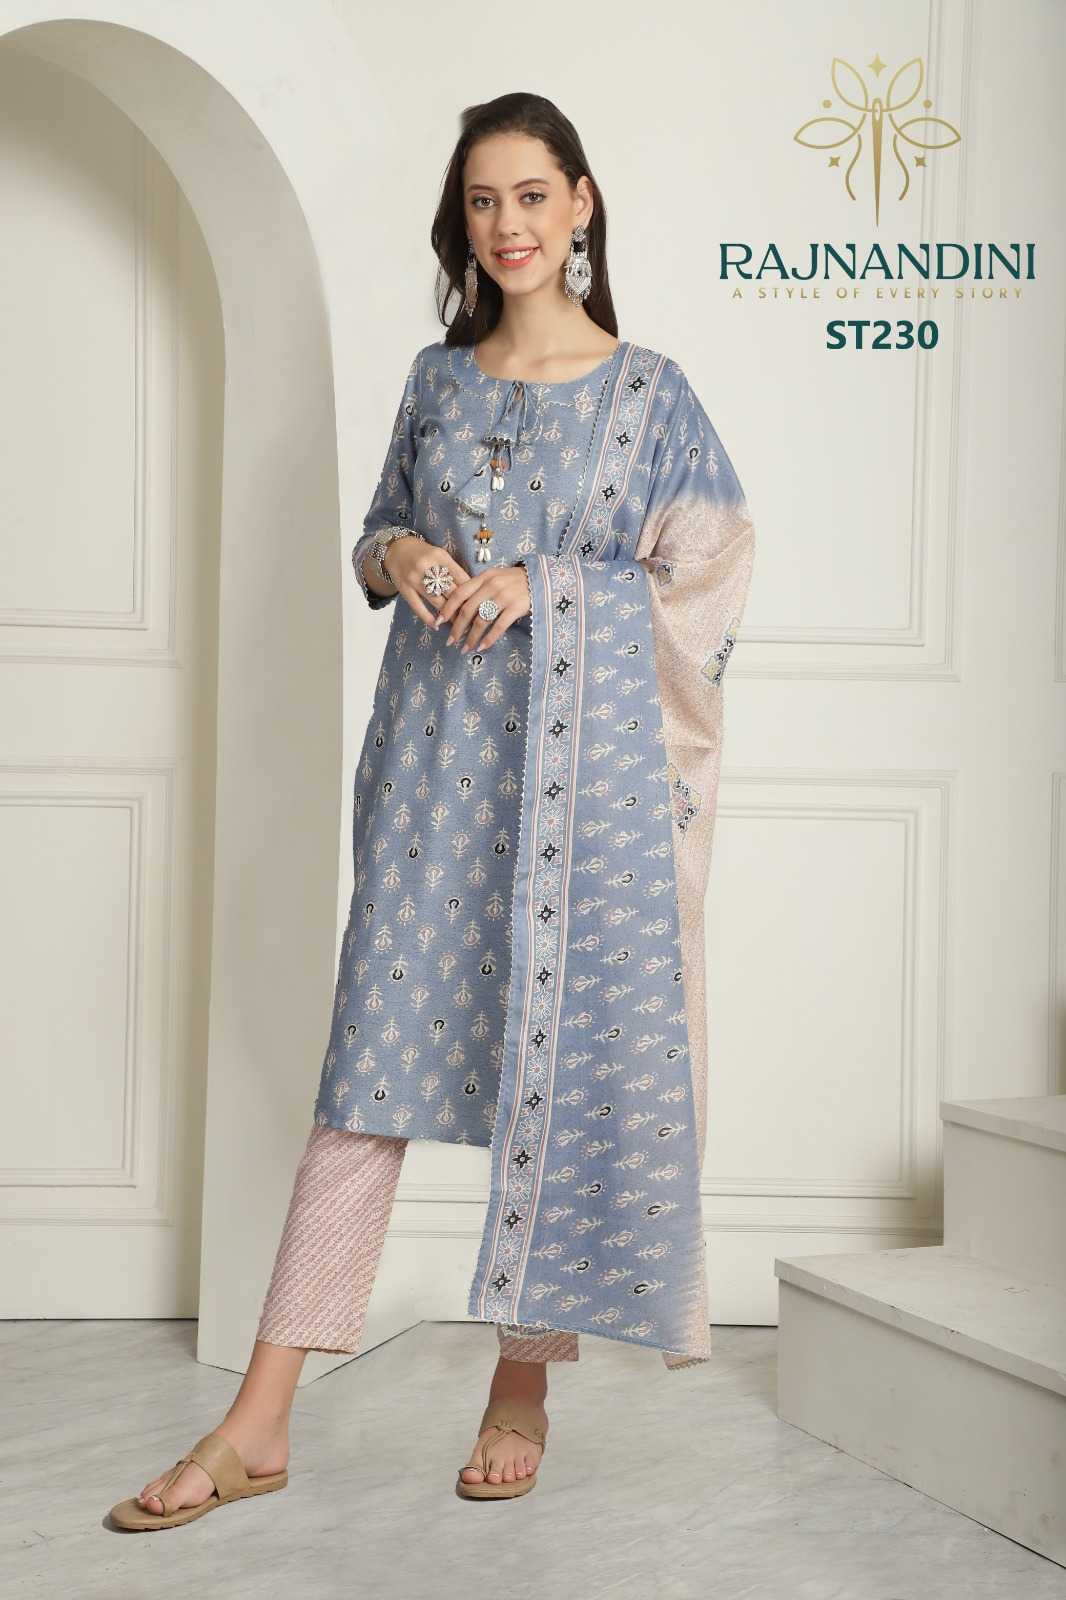 rajnandini presents bela cotton comfortable stylish readymade salwar kameez